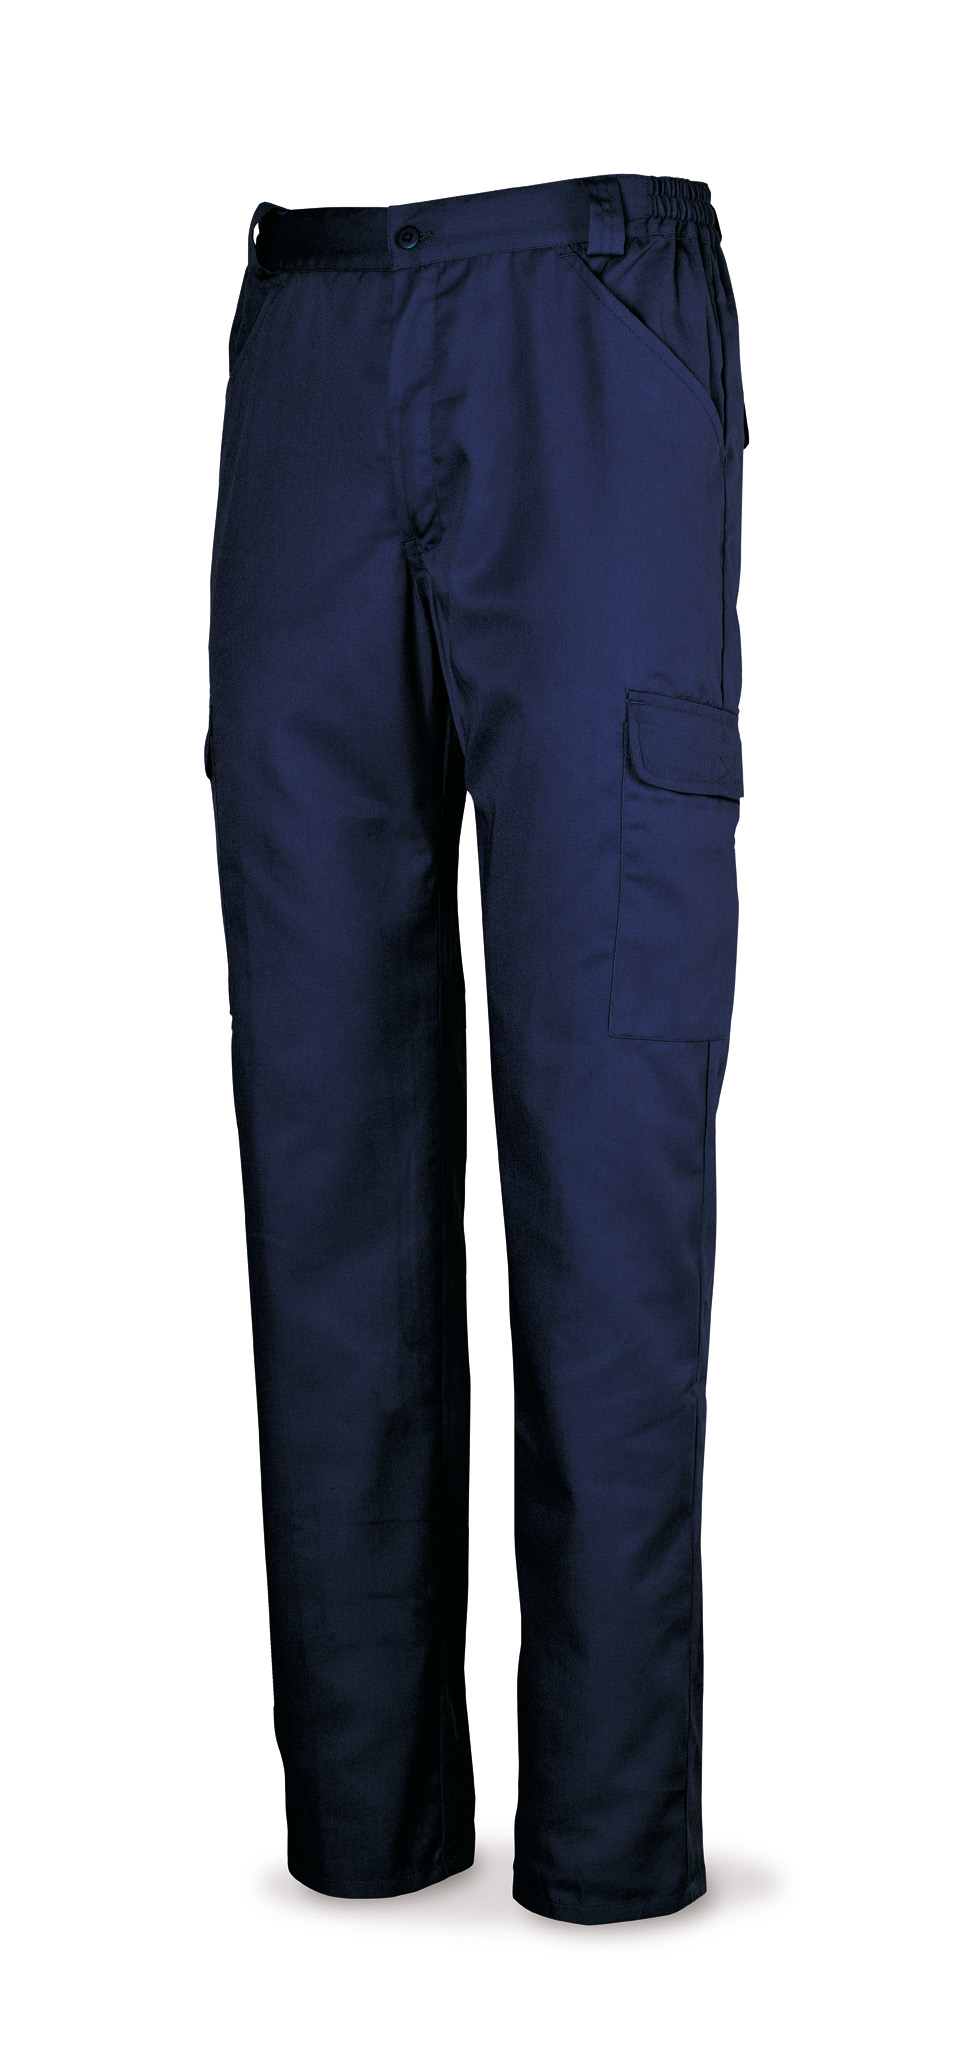 Pantalon tergal azul marino 38